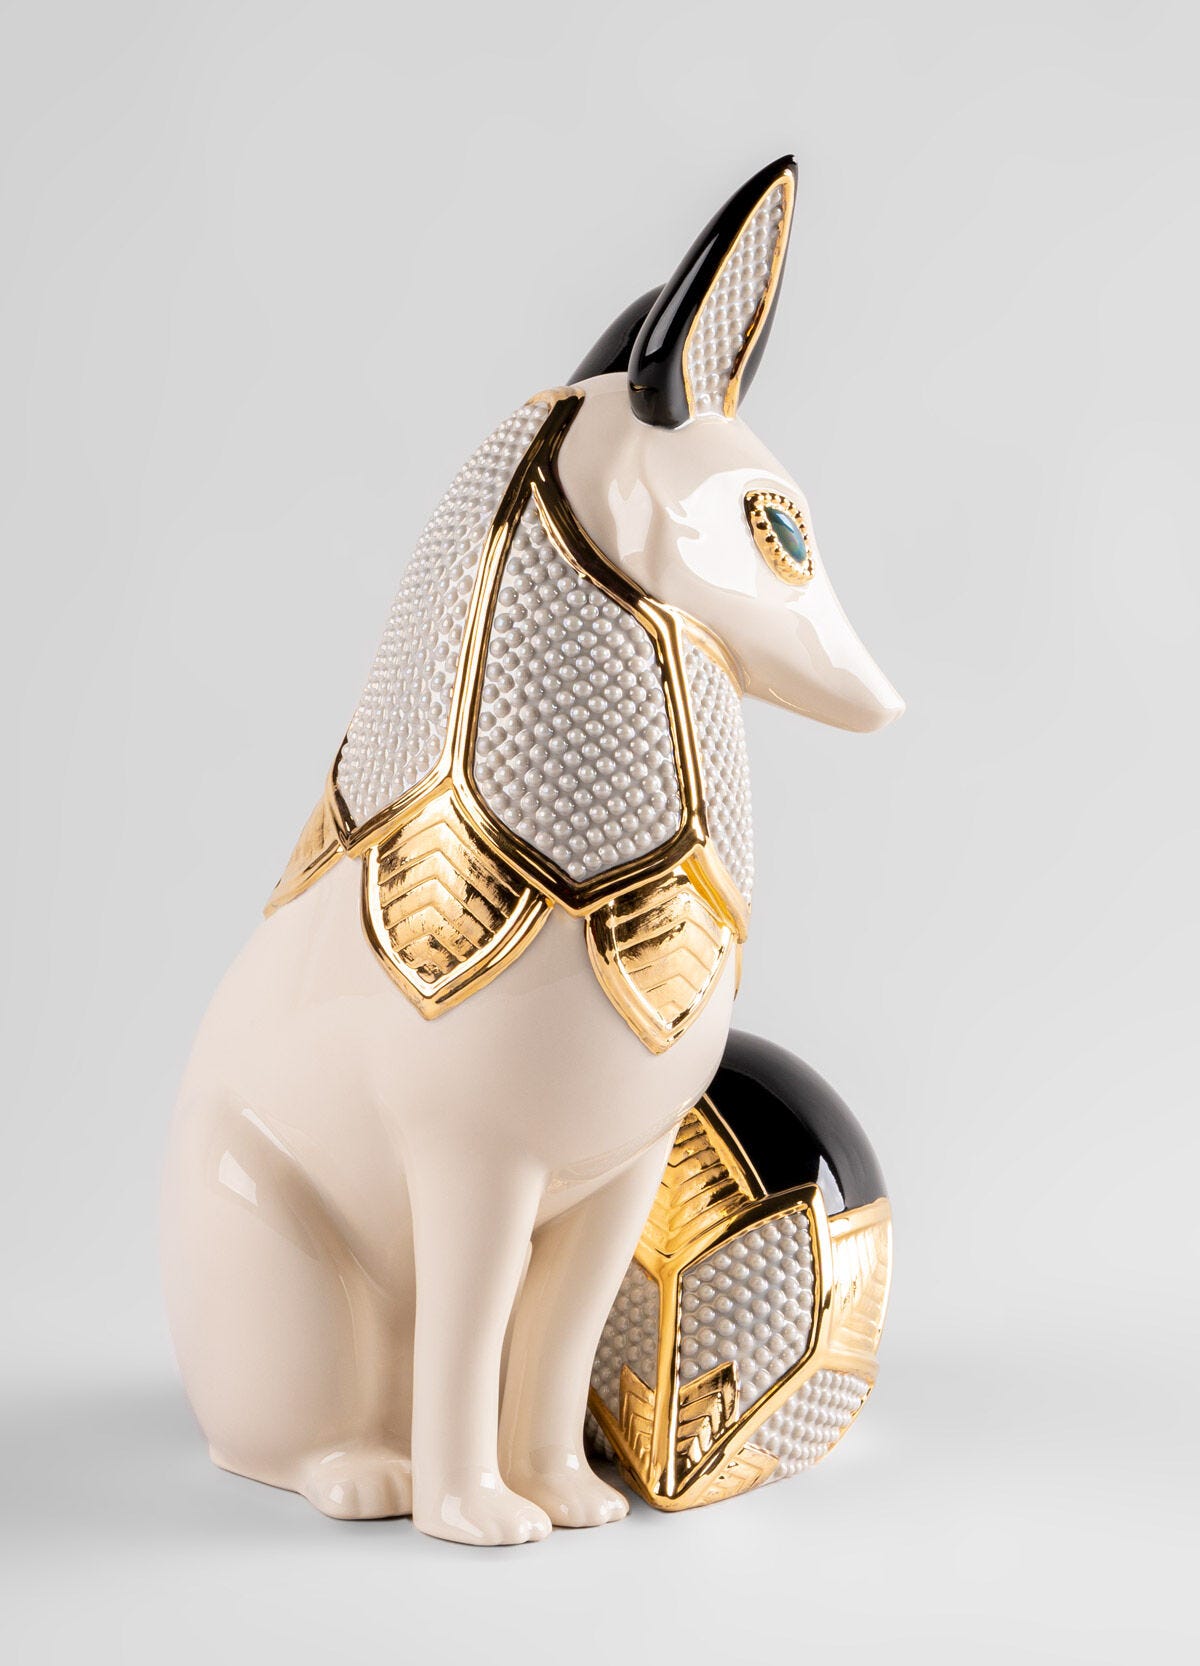 Fox jewel Sculpture